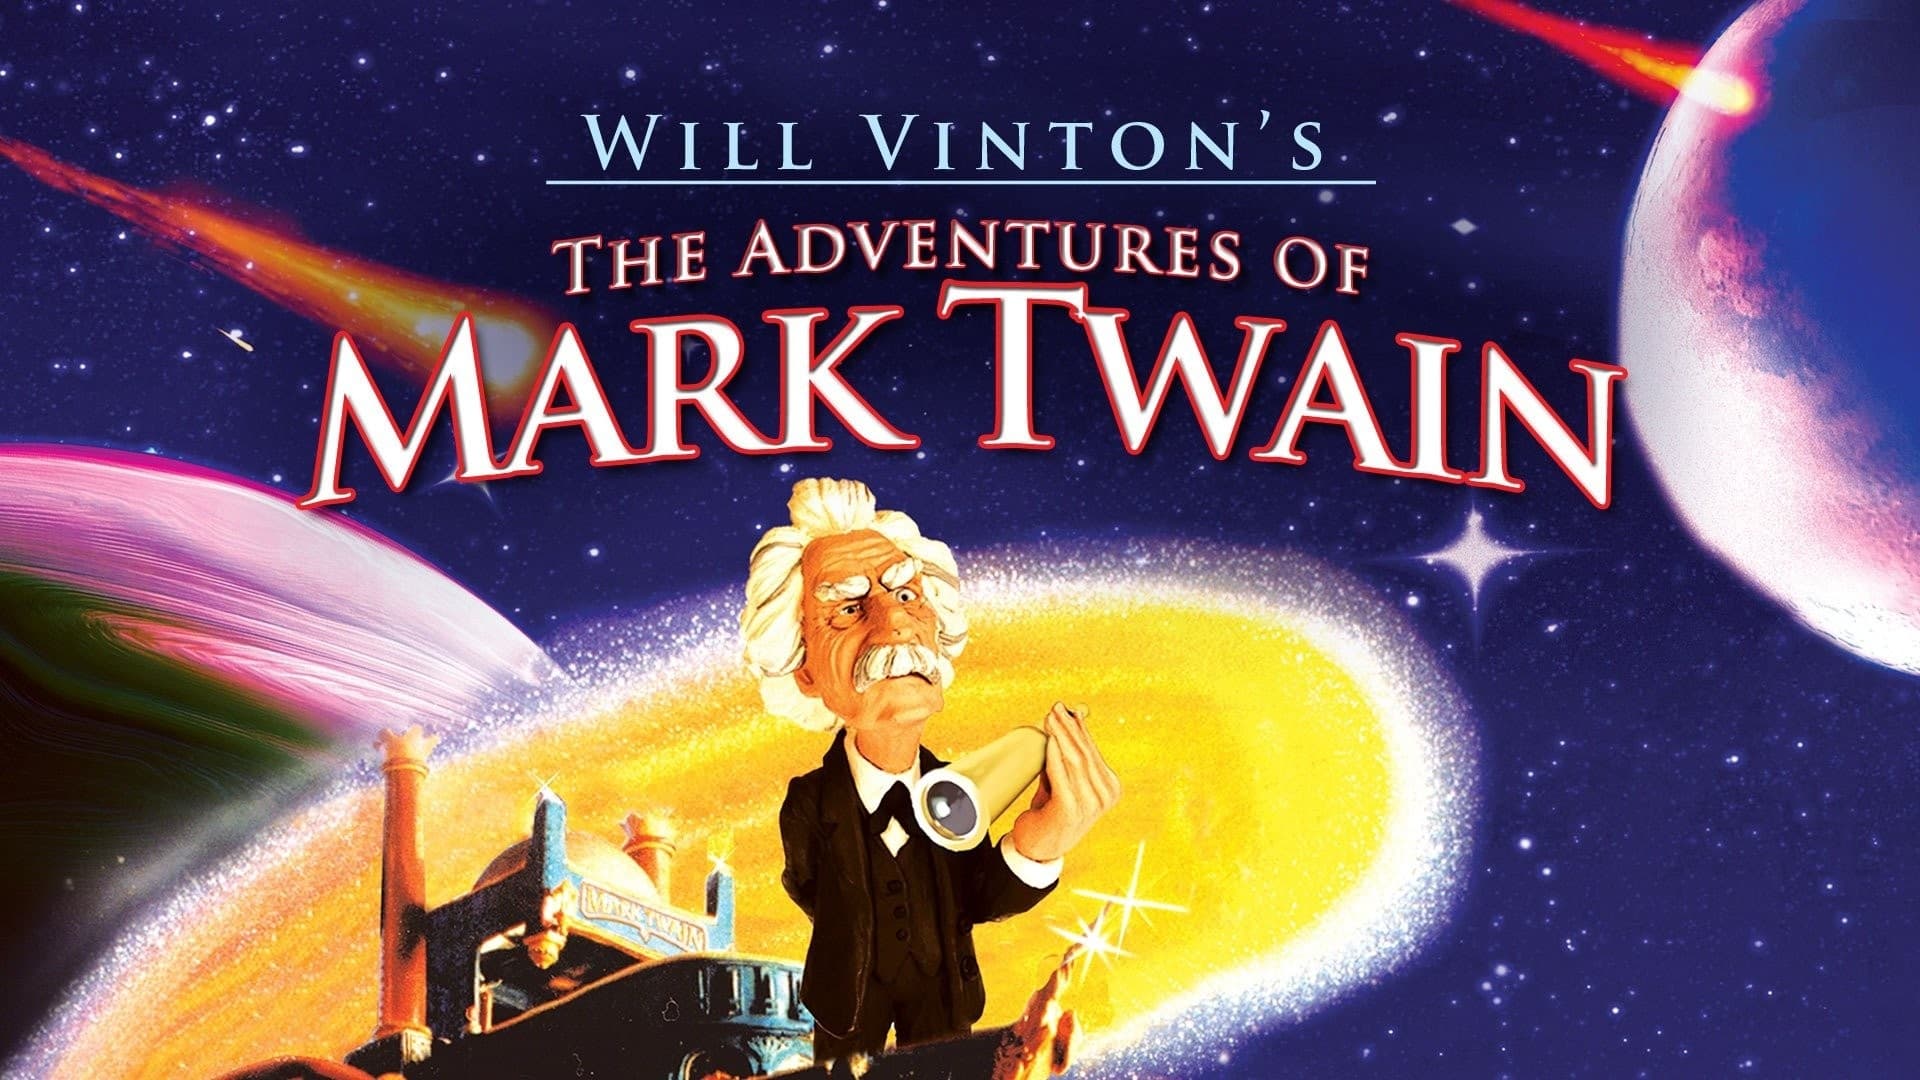 The Adventures of Mark Twain